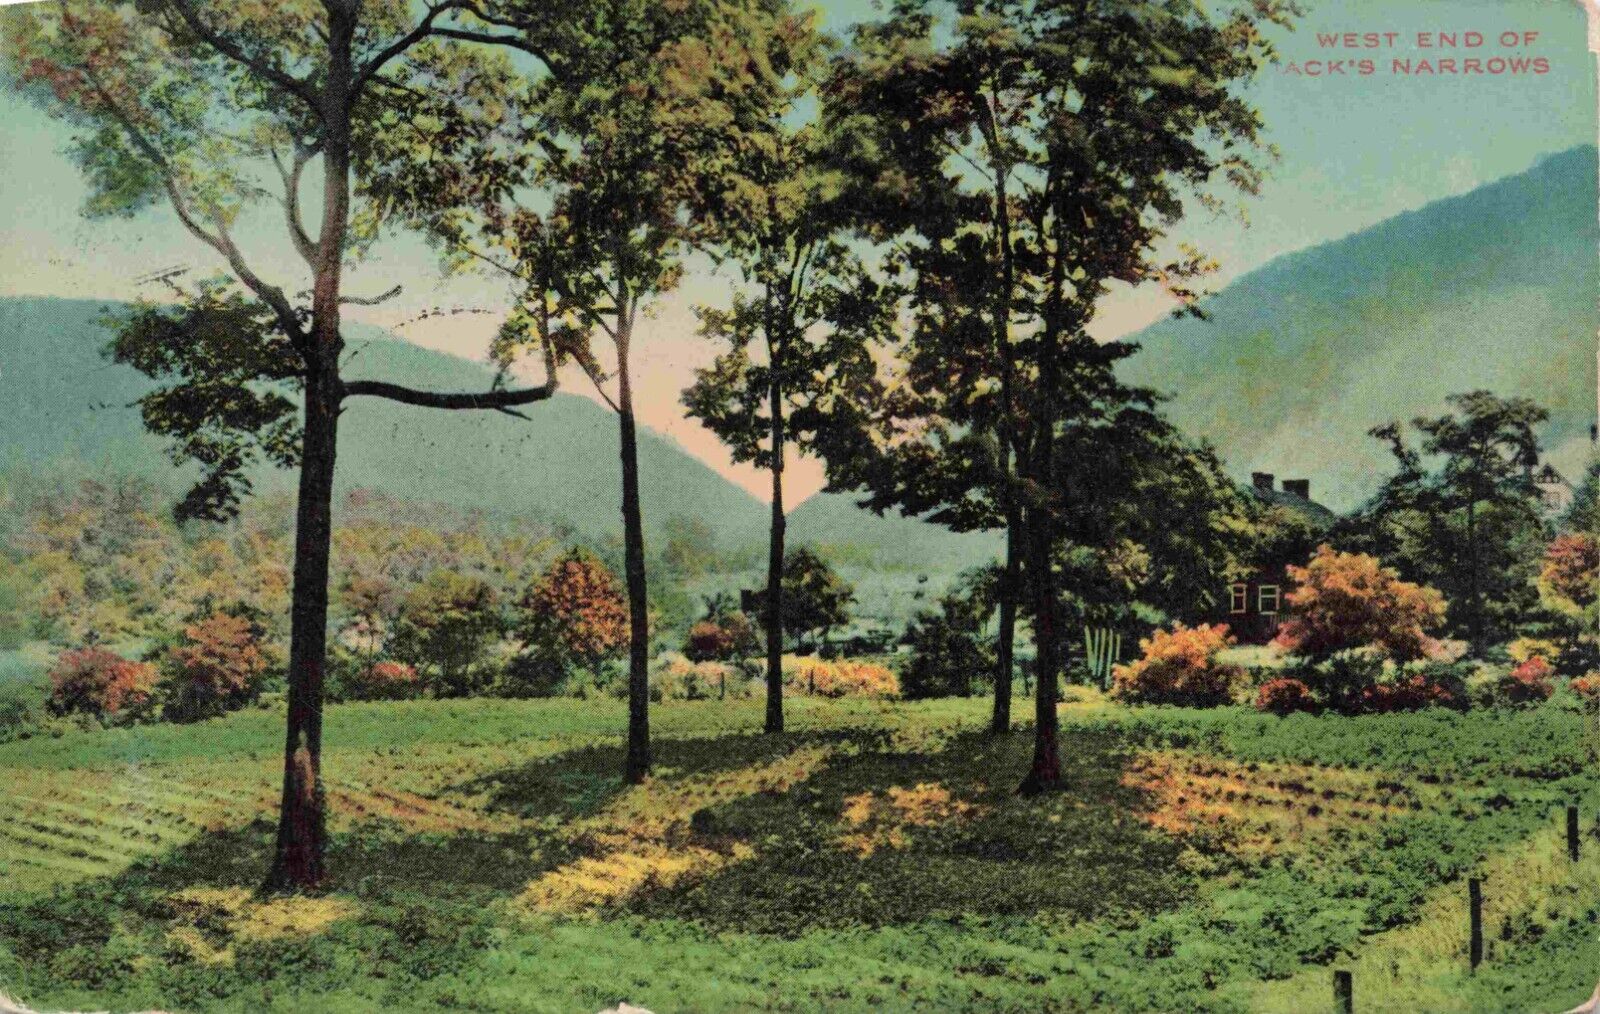 1911 Jack's Narrows Huntingdon County Mt Union Mapleton Pennsylvania PA Postcard